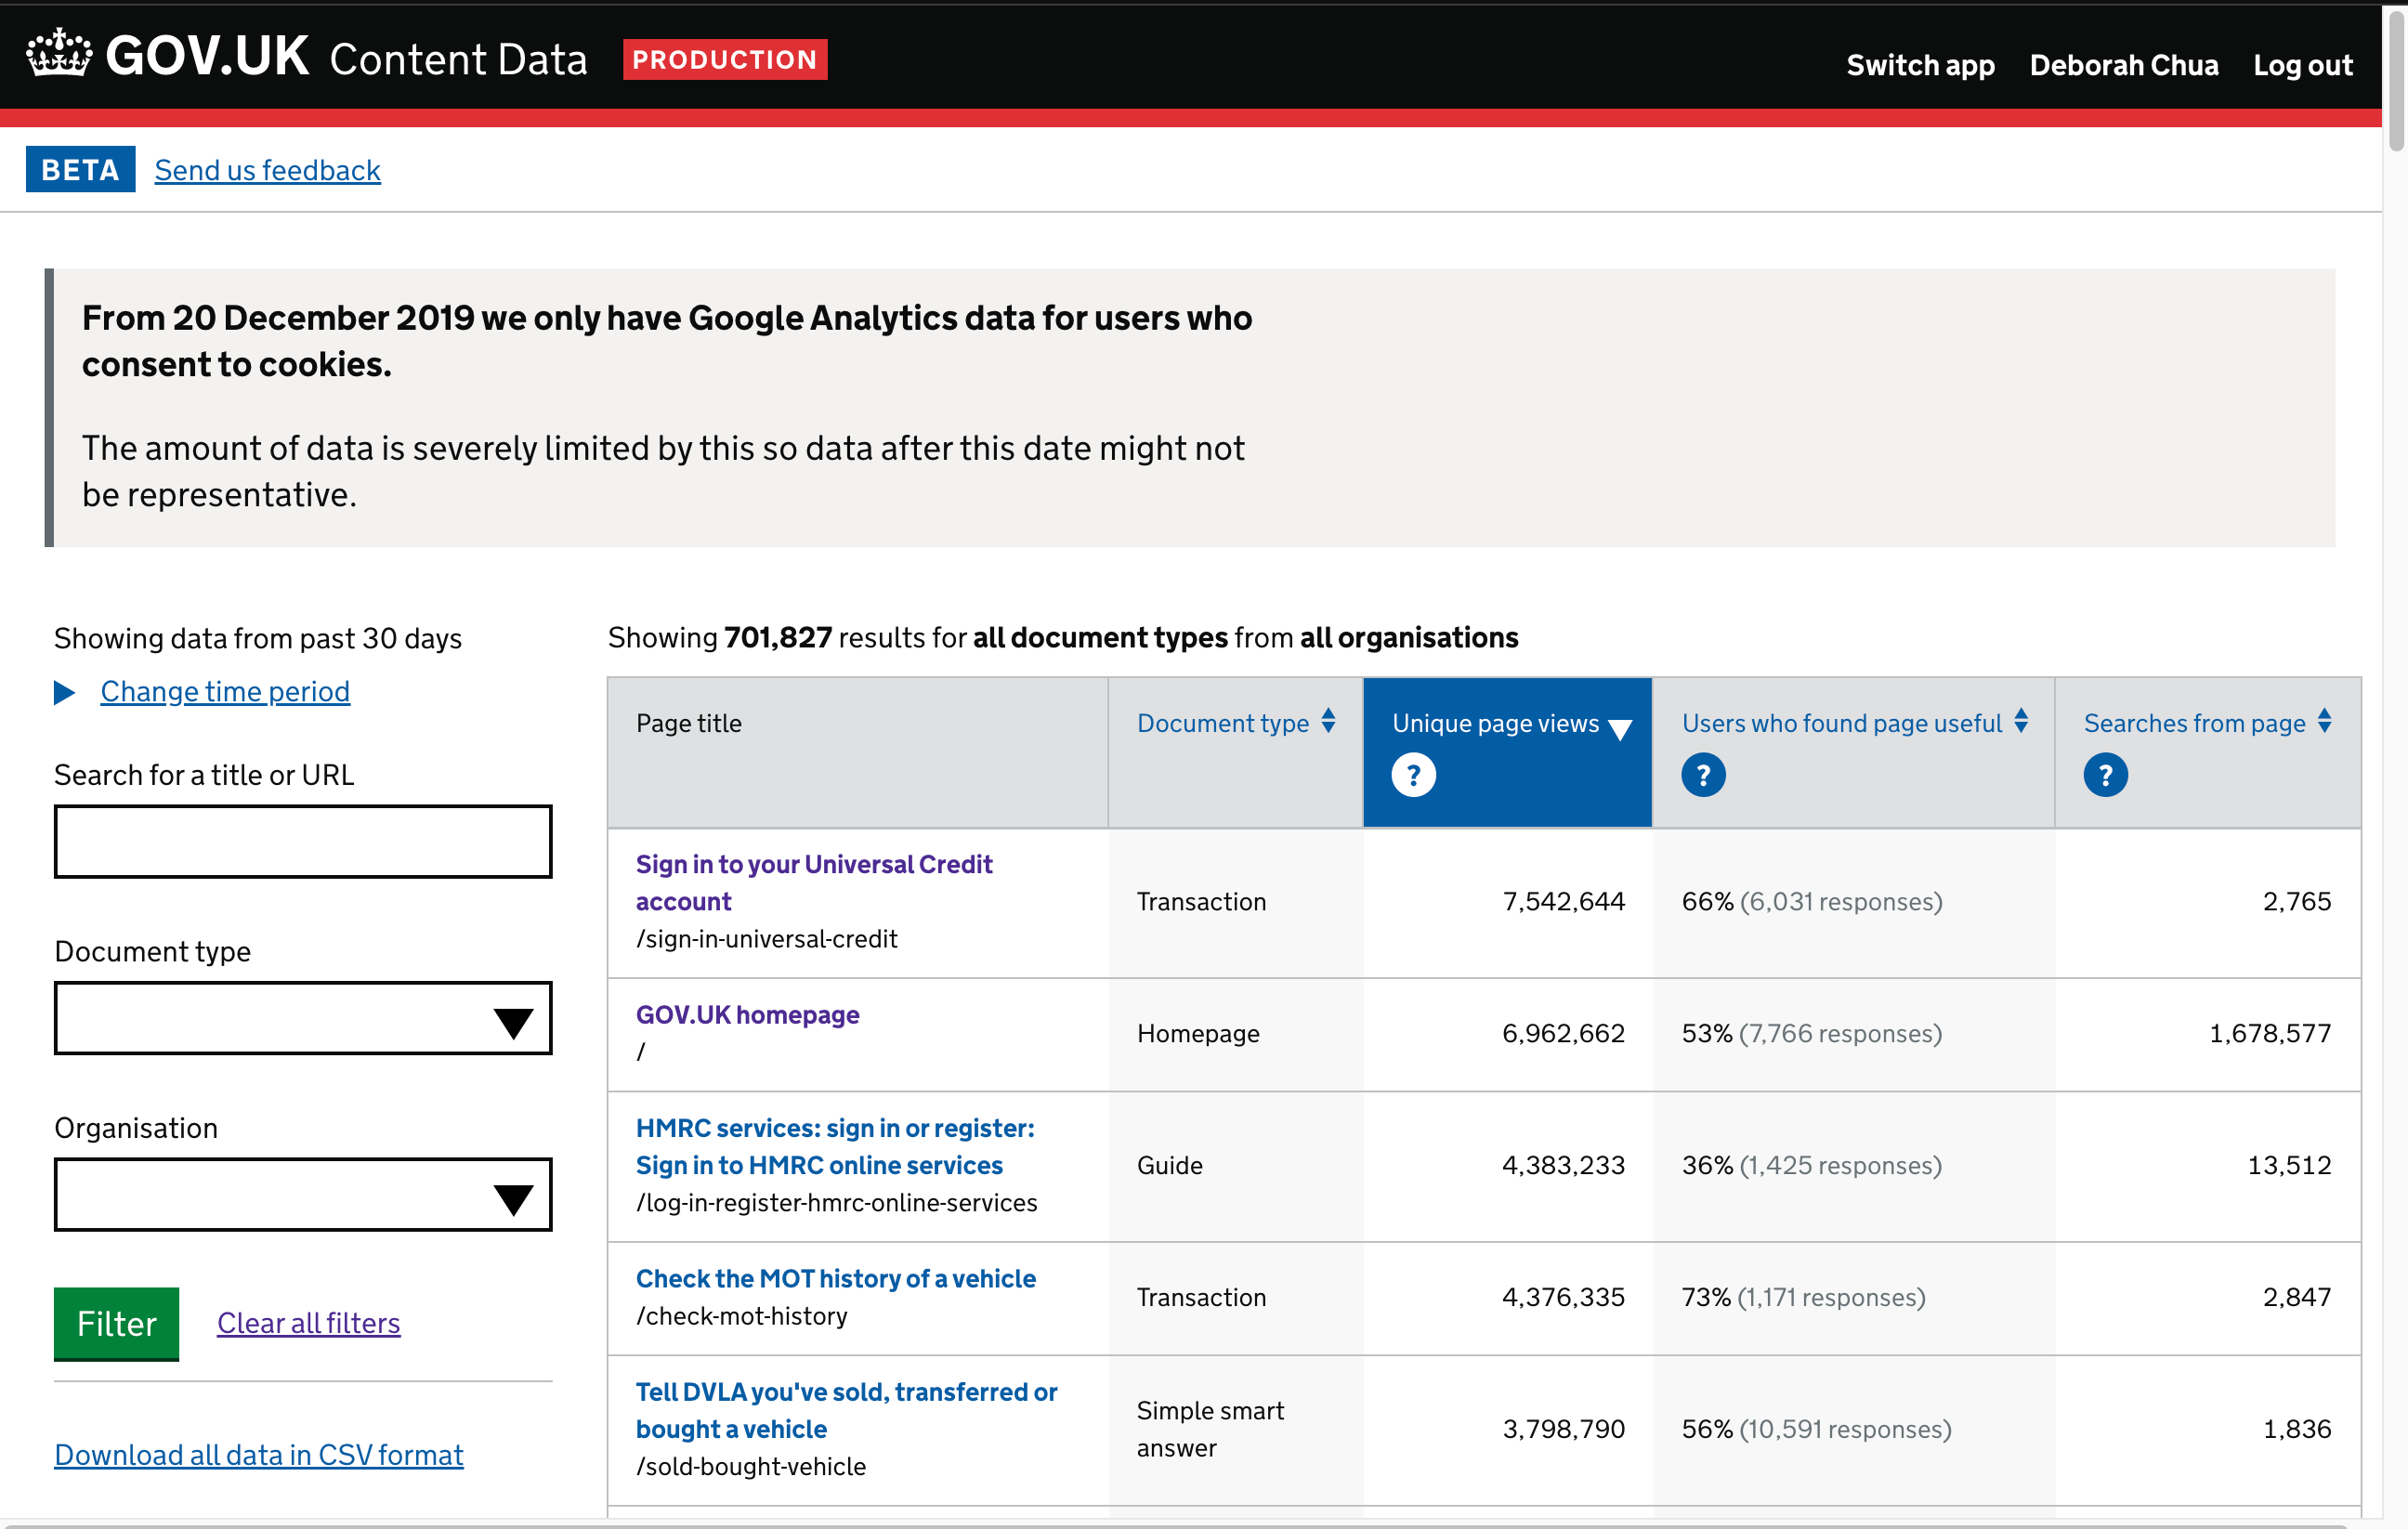 Screenshot of the Content Data app